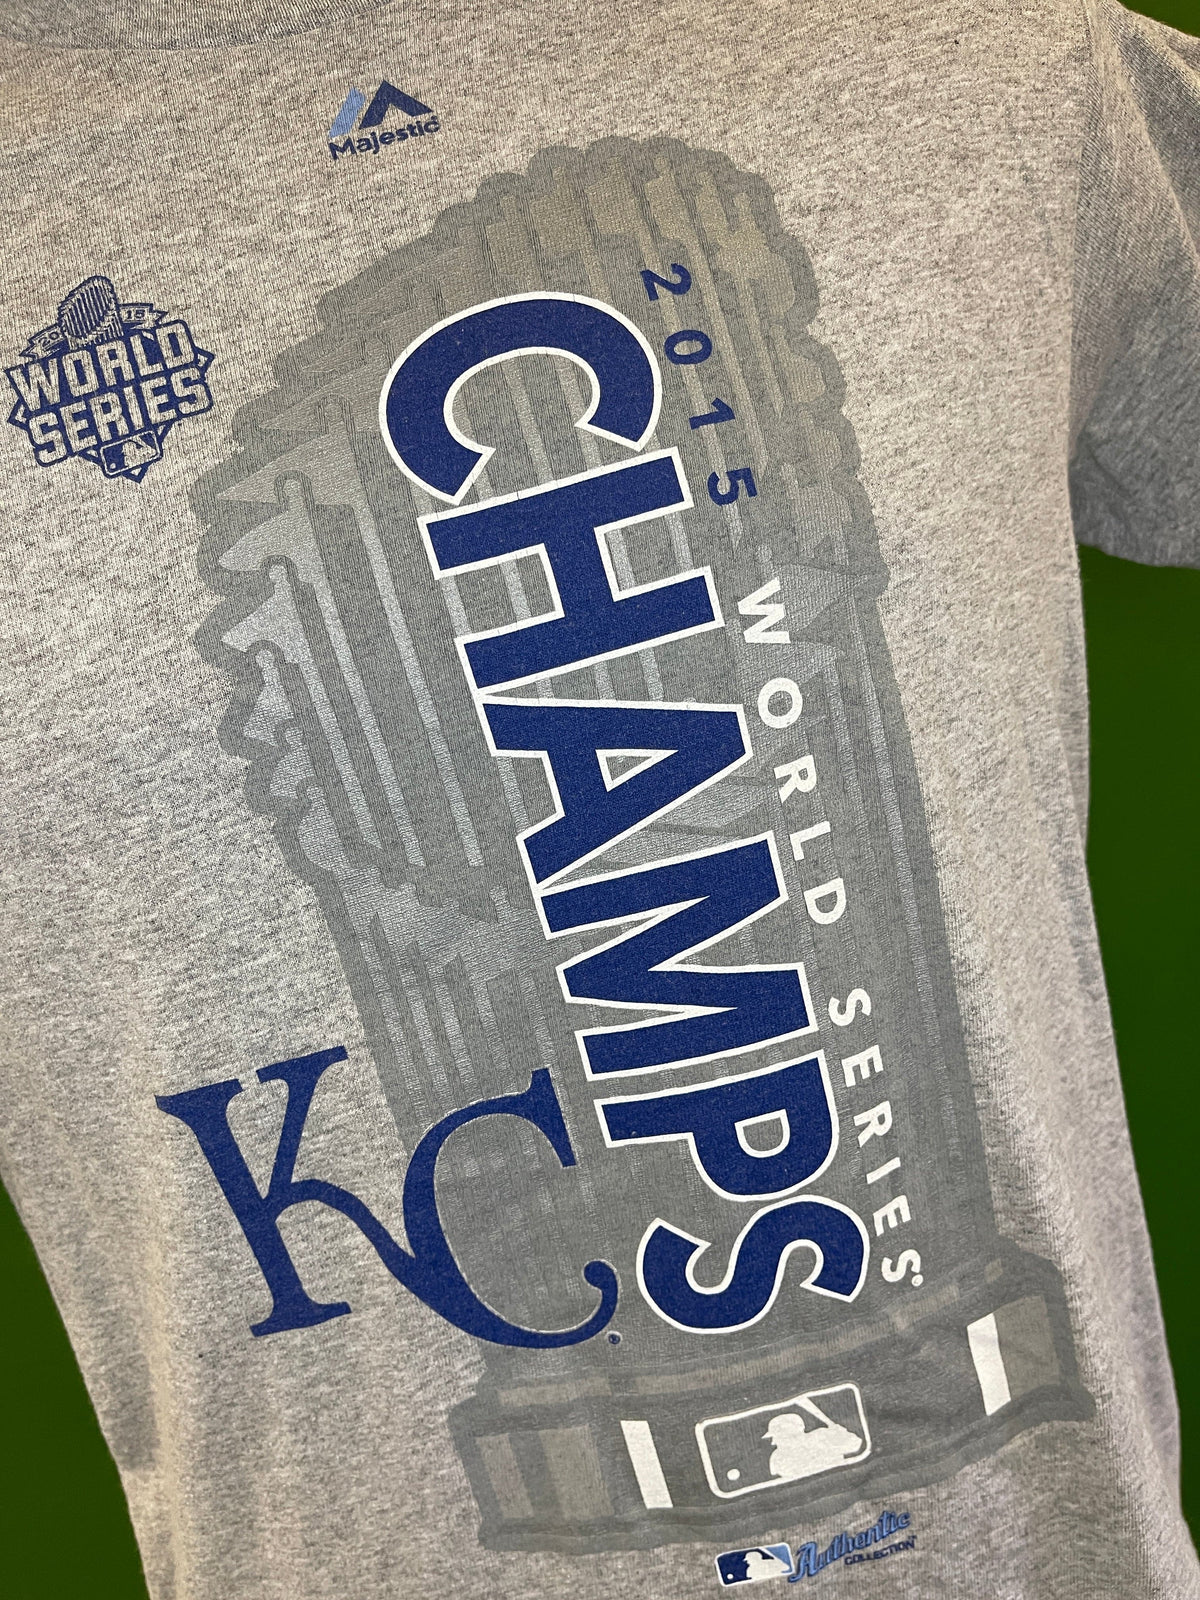 MLB Kansas City Royals 2015 World Series Champions T-Shirt Men's Small